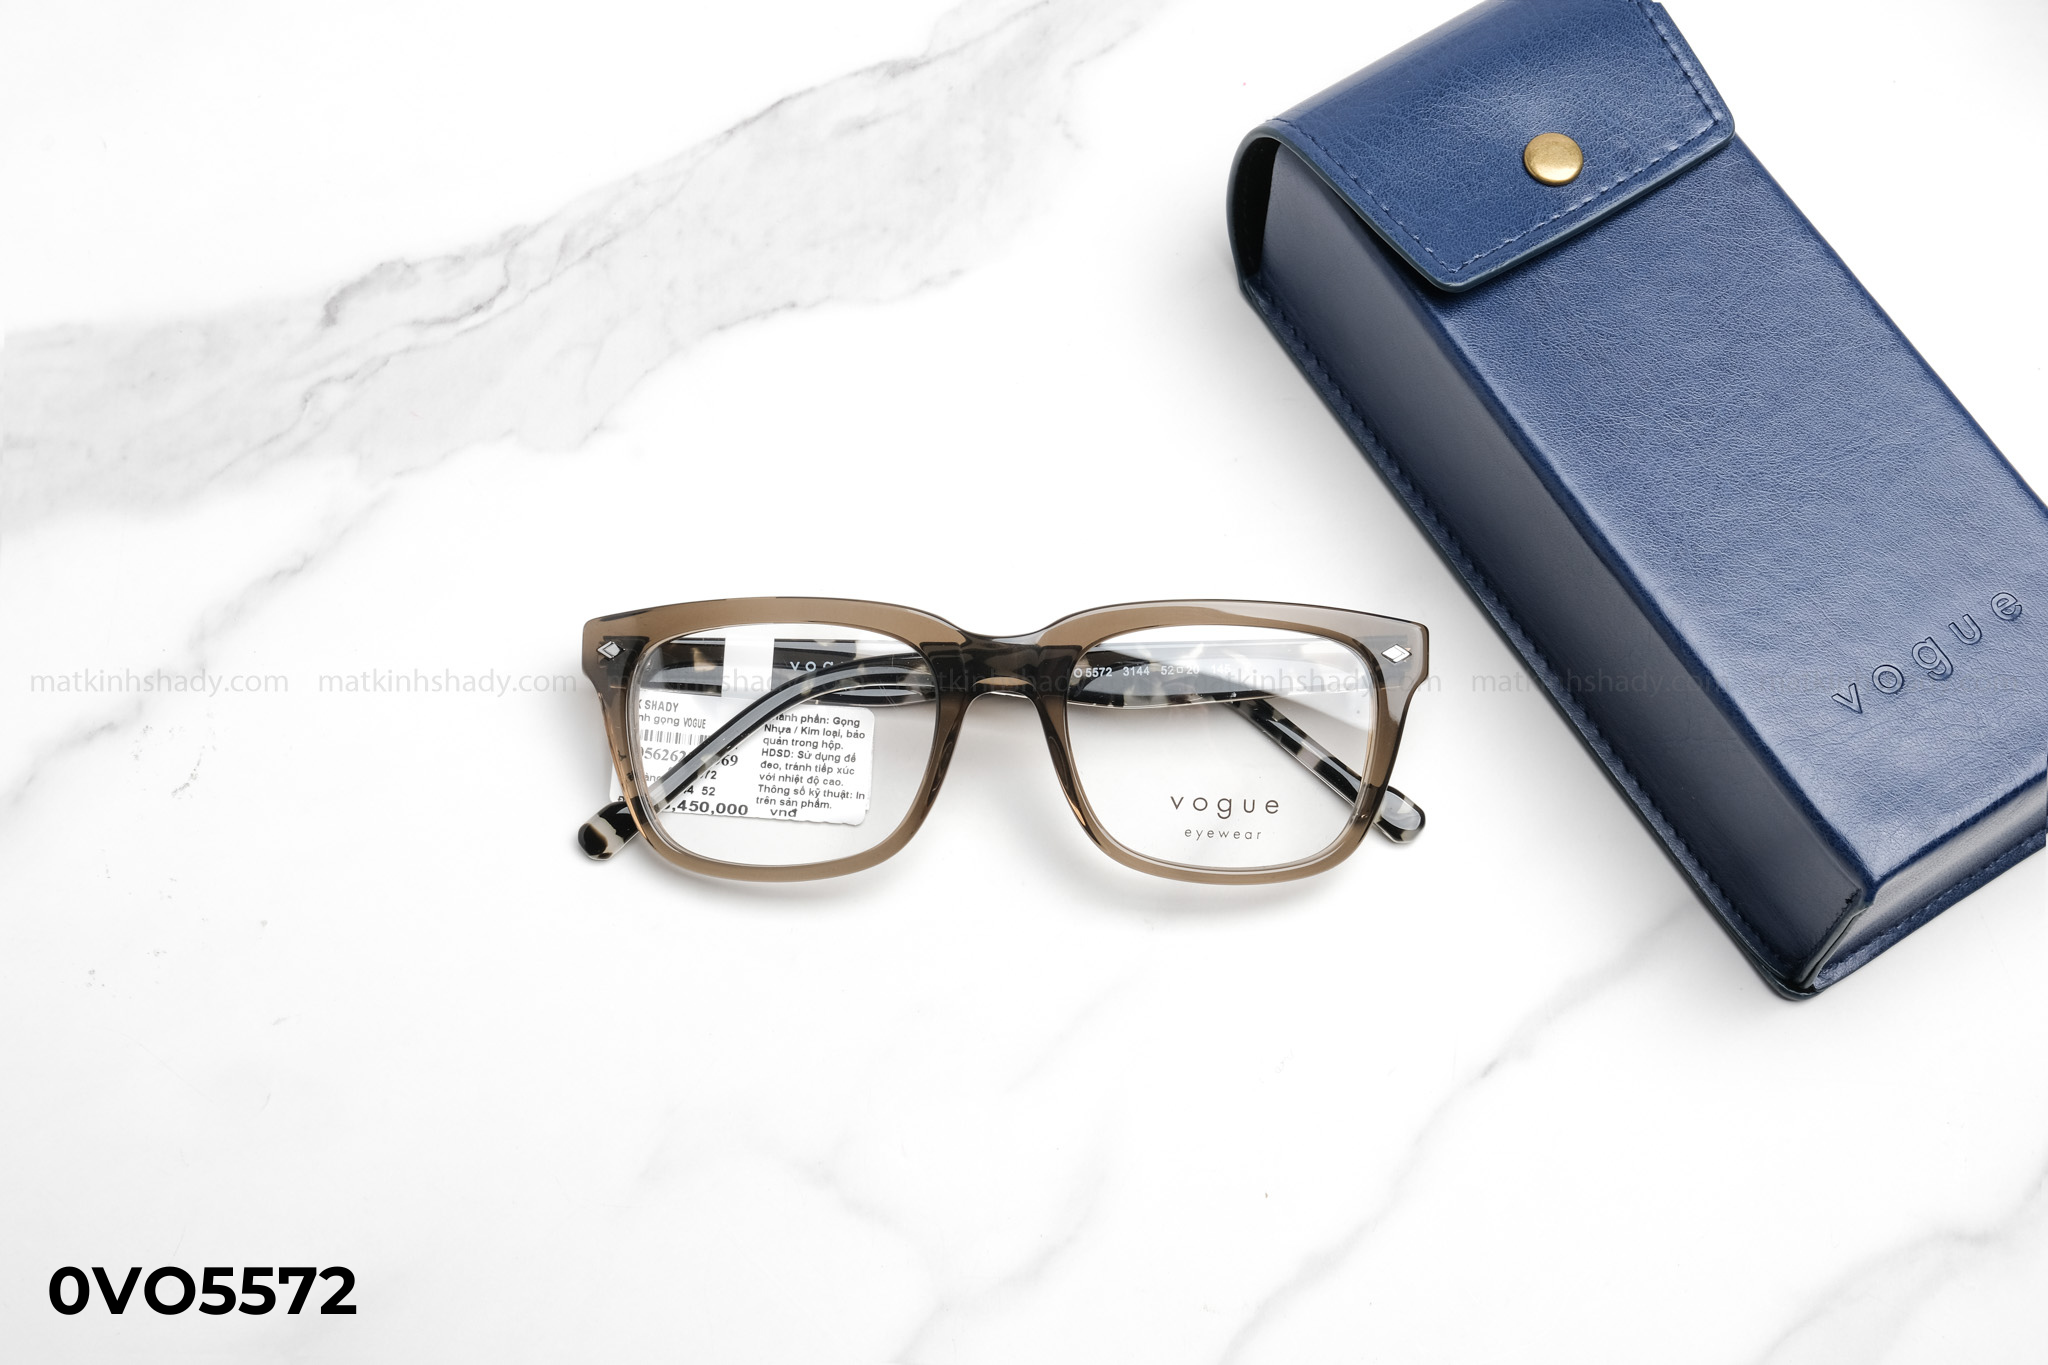  Vogue Eyewear - Glasses - 0VO5572 